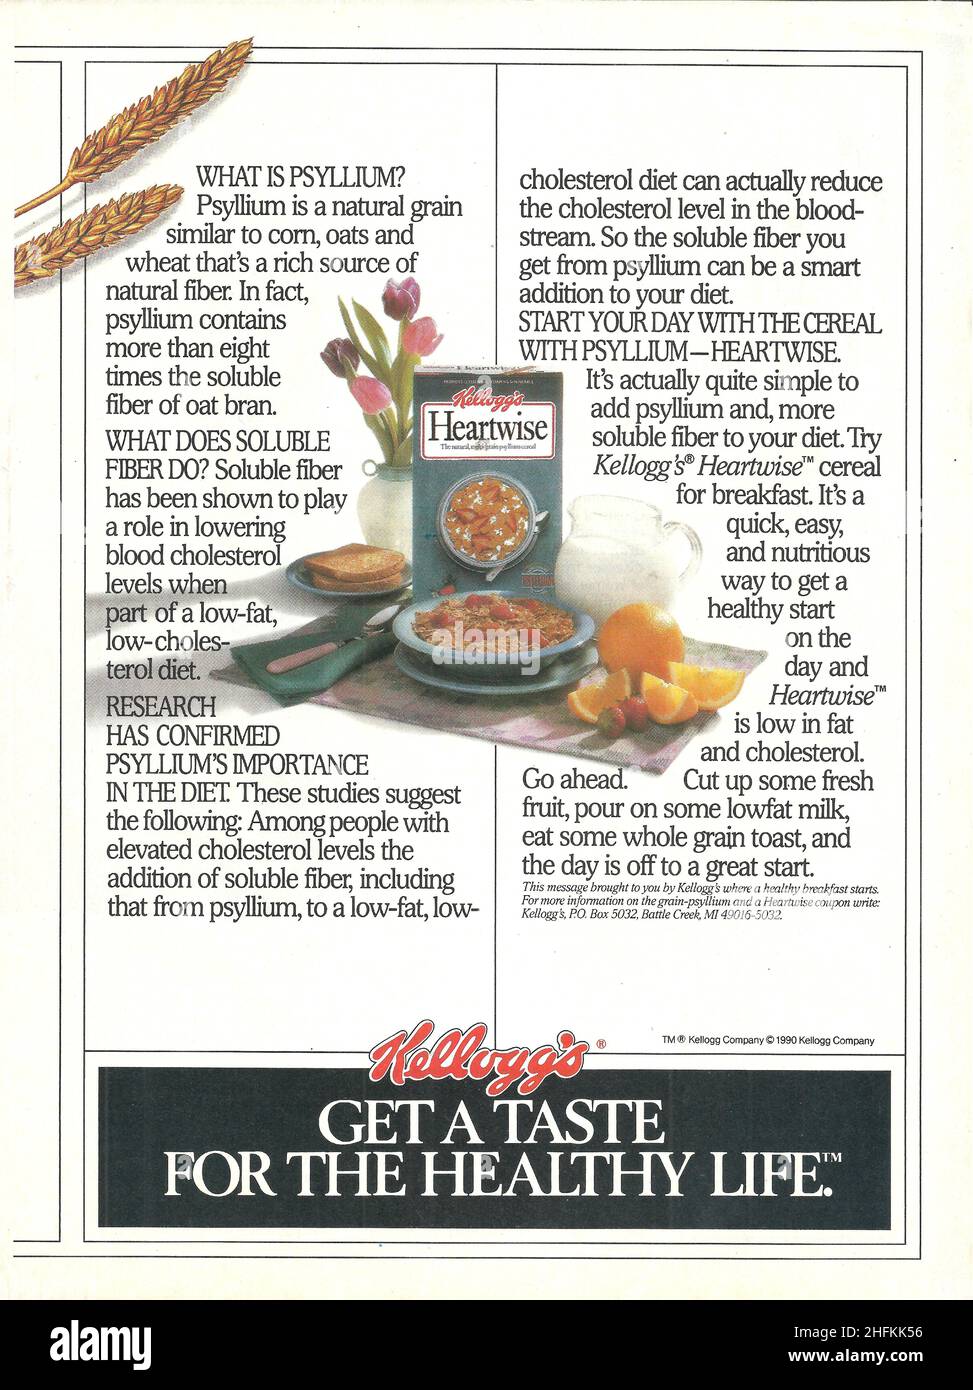 Kellogg's Heartwise flakes vintage paper advertisement 1980s 80s Stock Photo